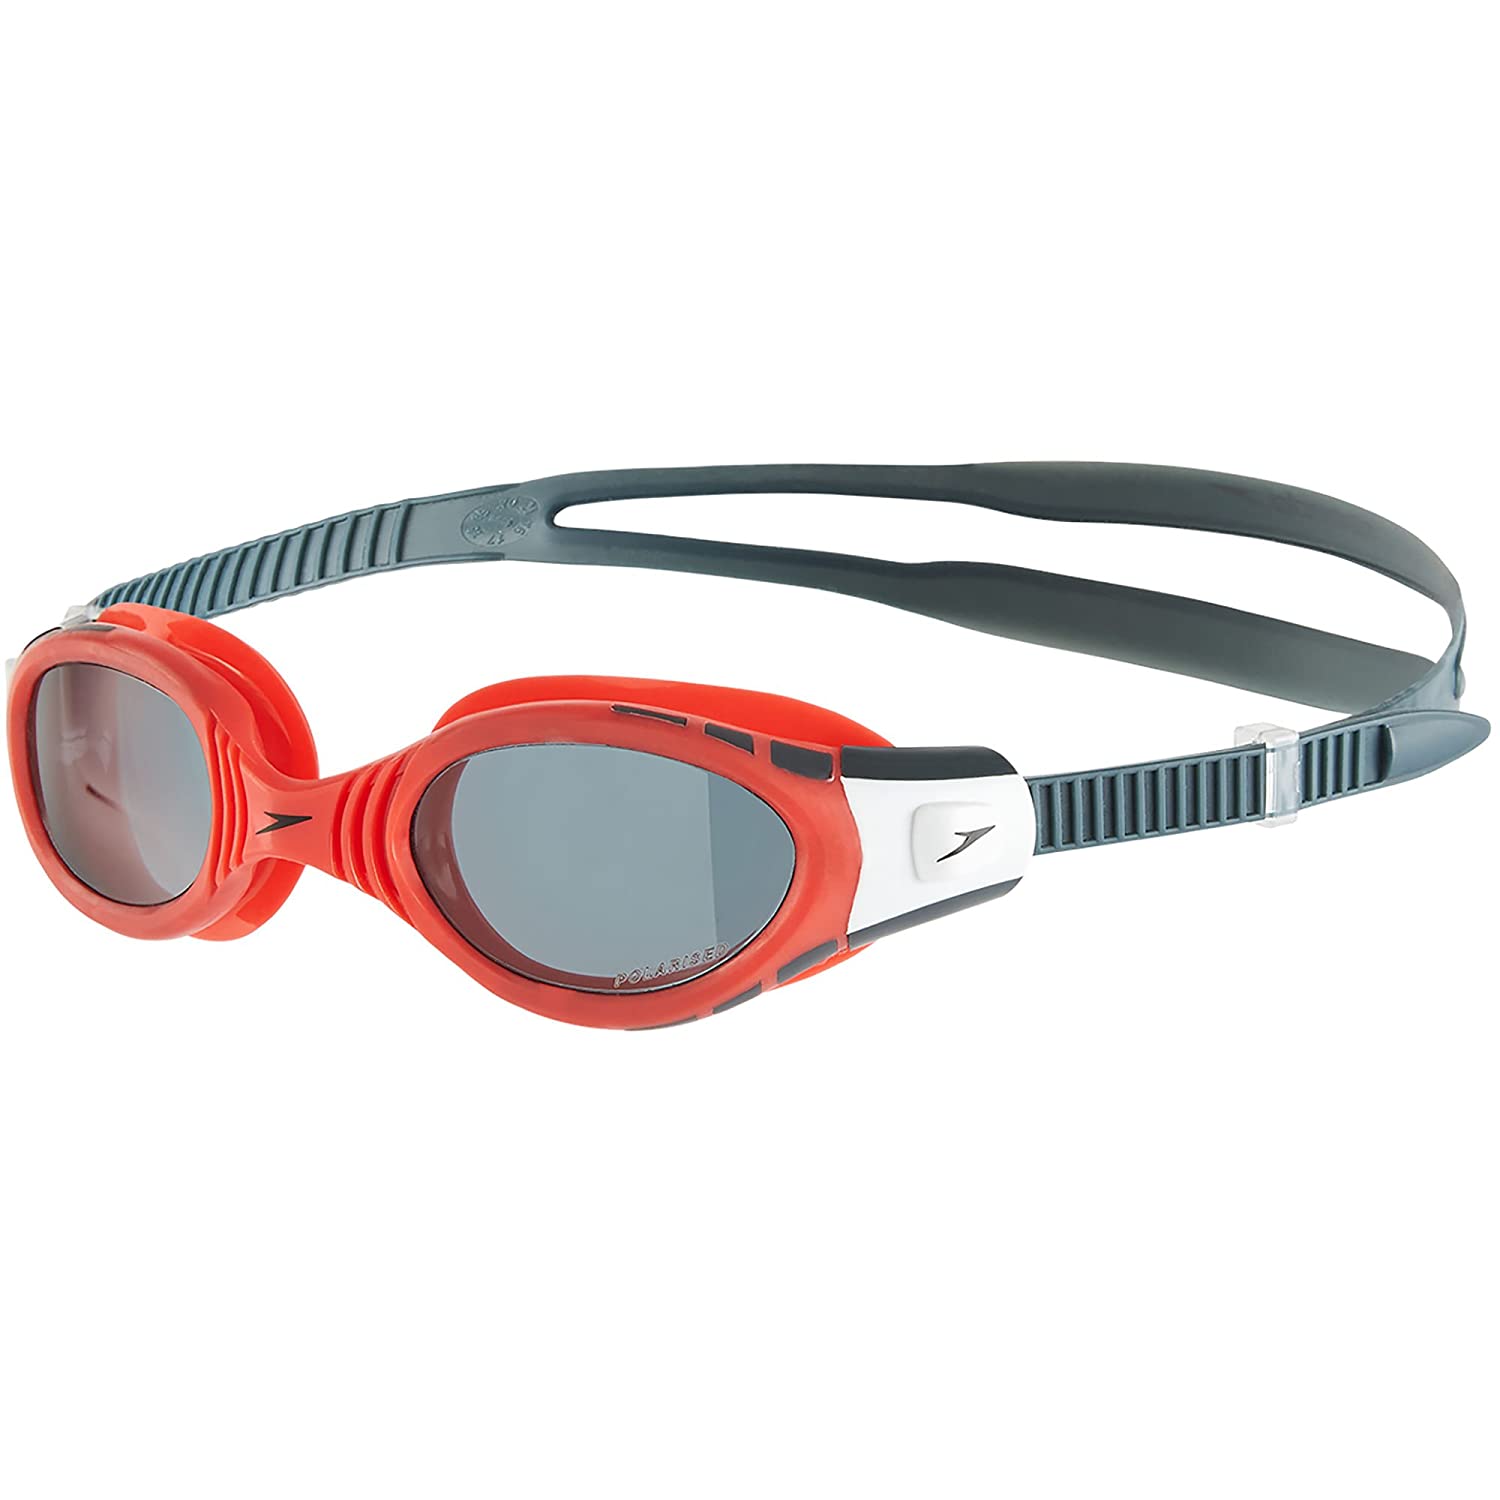 Speedo 808834B572 Blend Futura Biofuse Goggles (Red/Smoke) - Best Price online Prokicksports.com